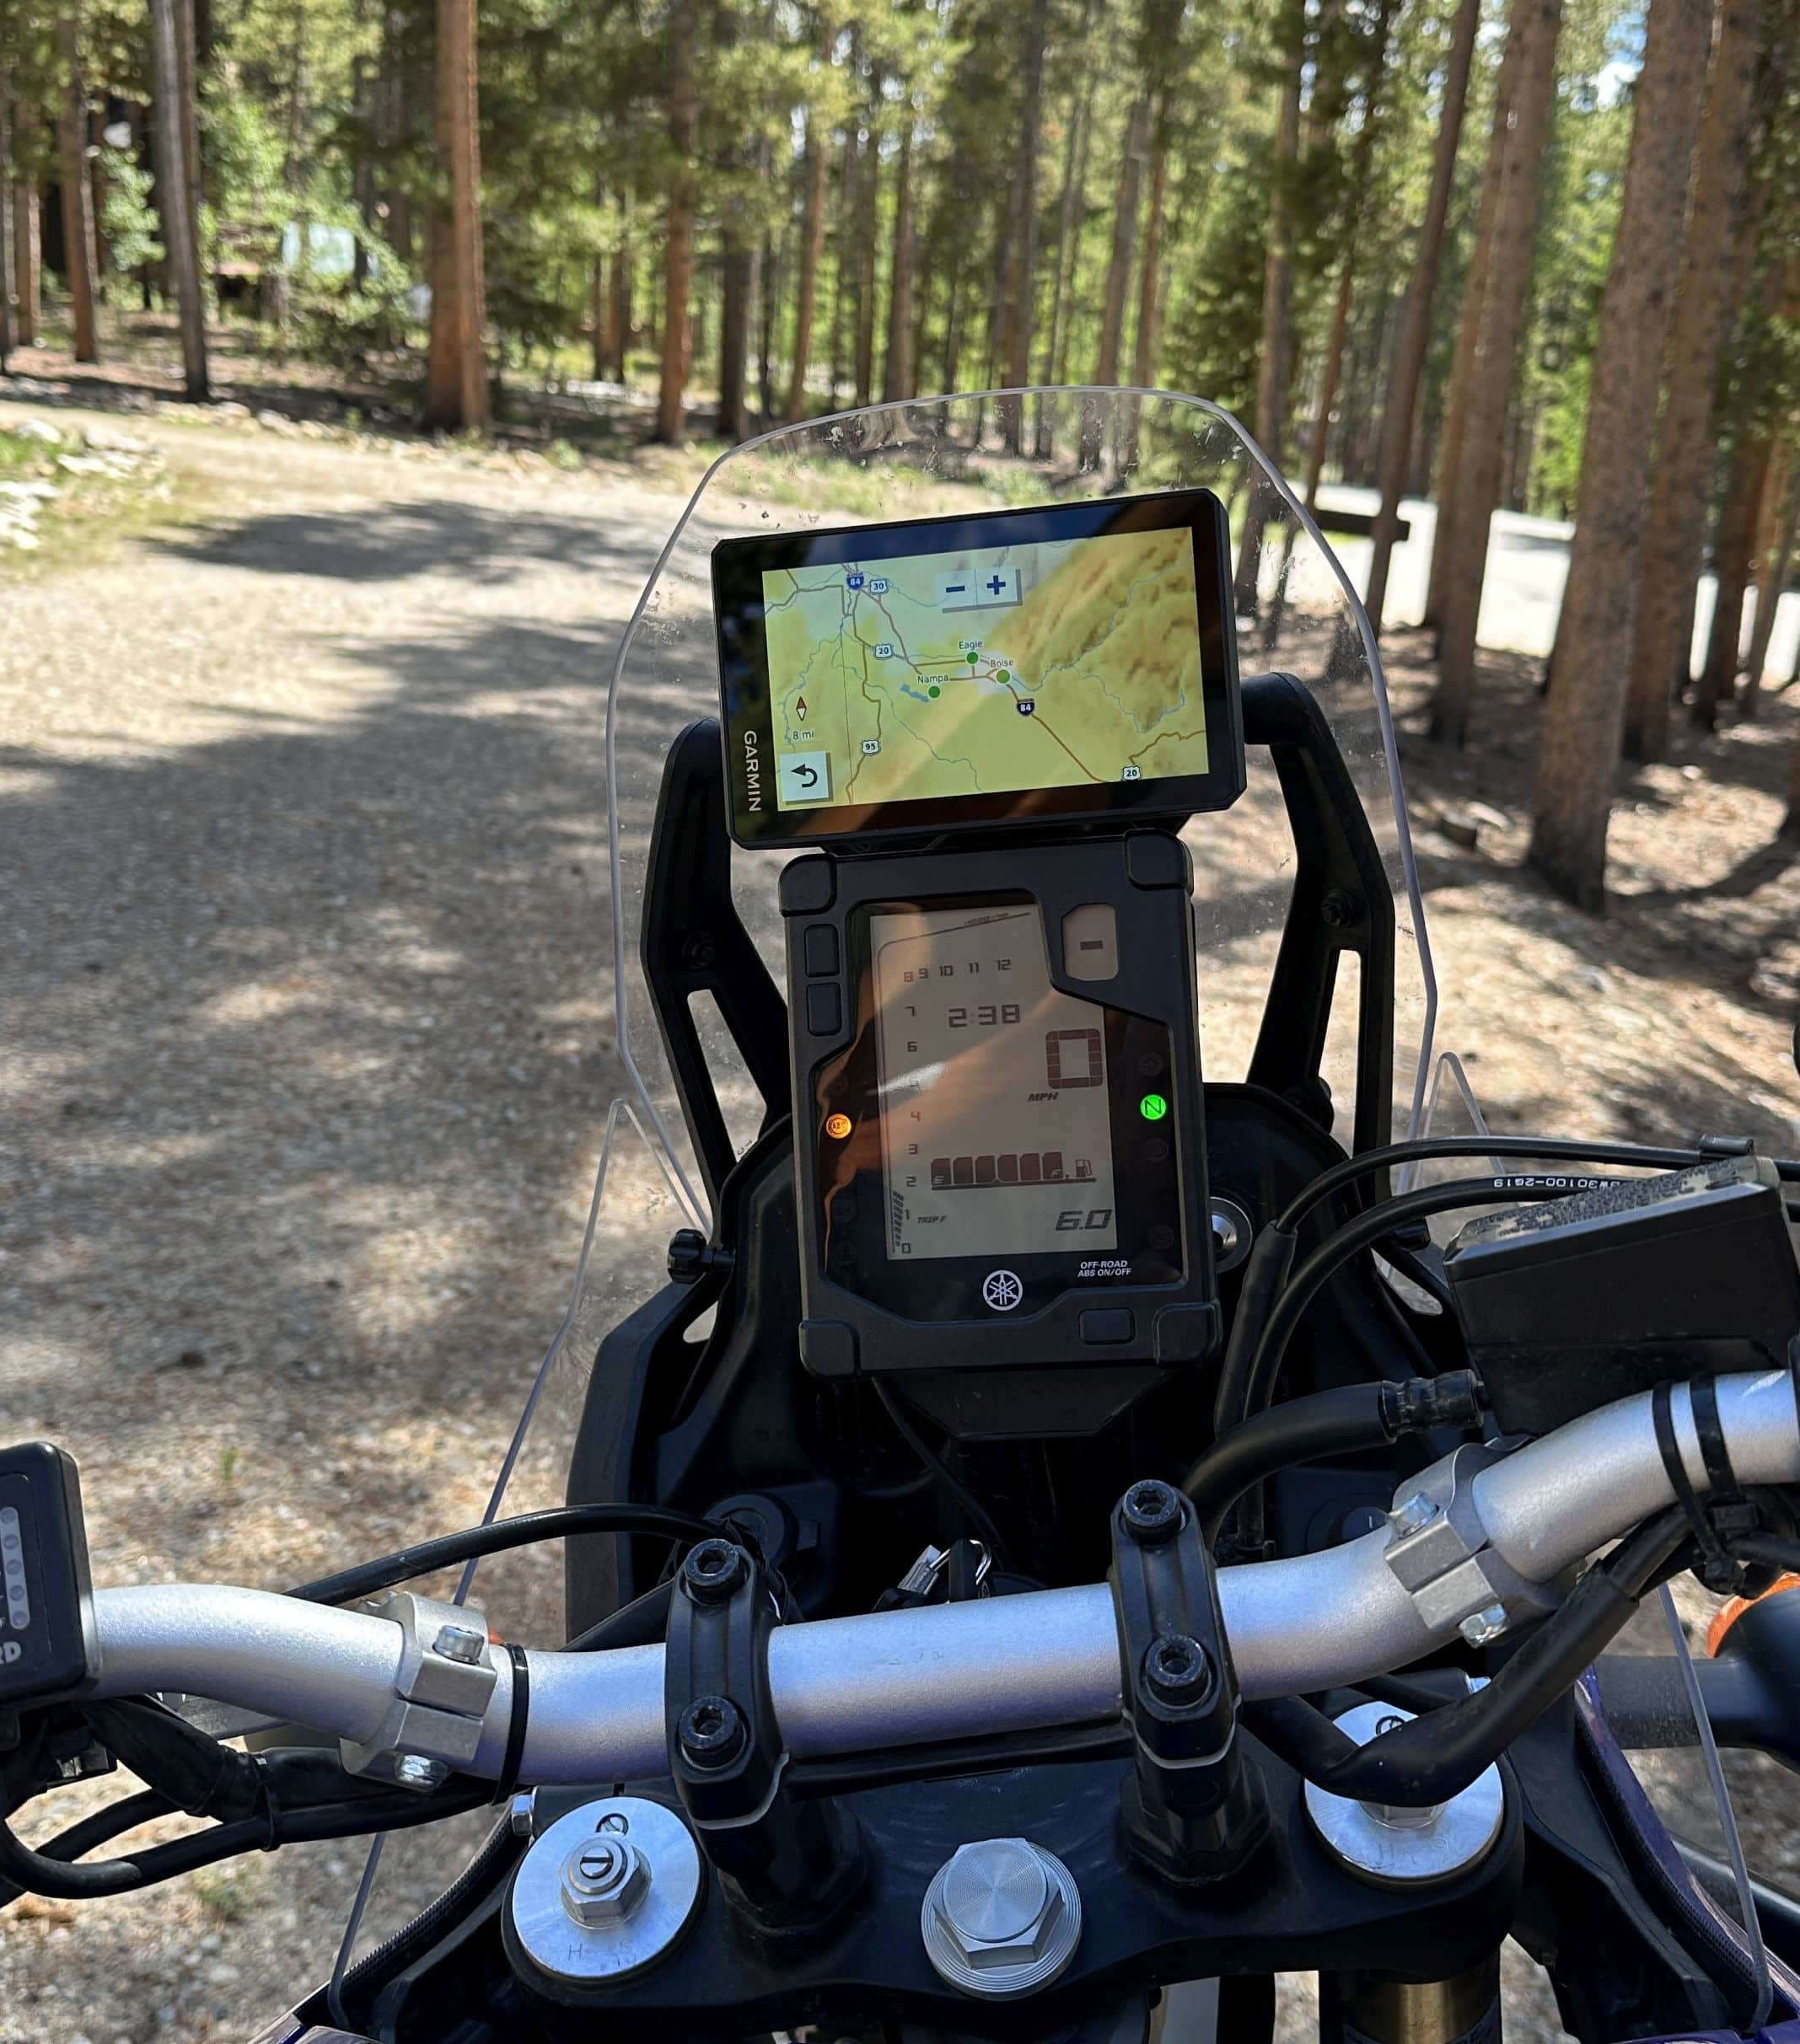 Phone vs GPS for Motorcycle Navigation